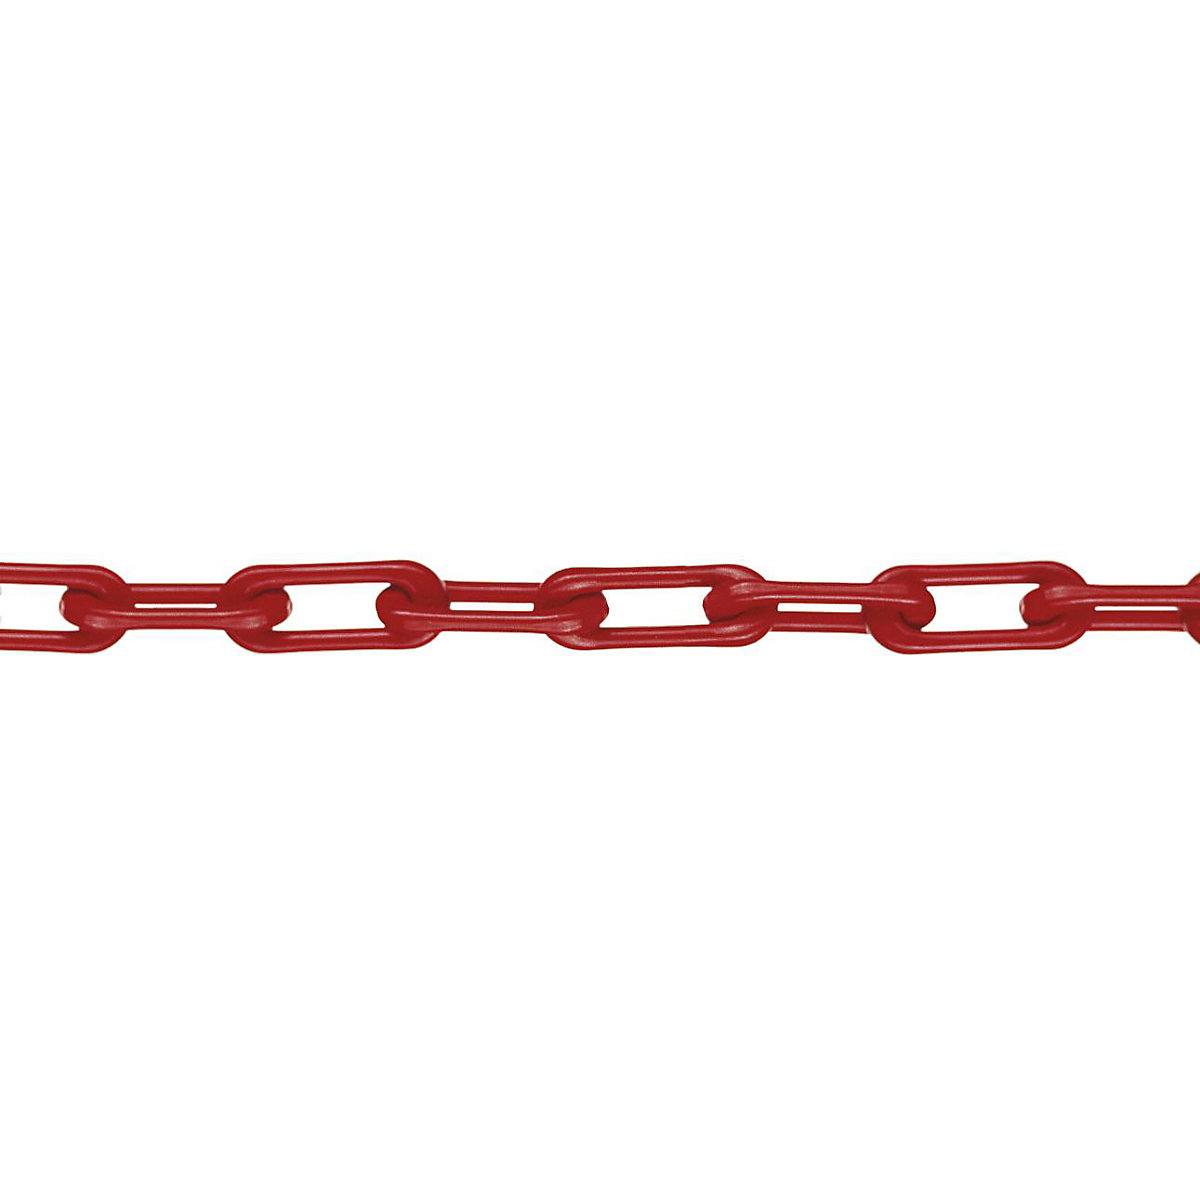 Nylon-kwaliteitsketting, MNK-kwaliteit 6, lengte 50 m, rood-6